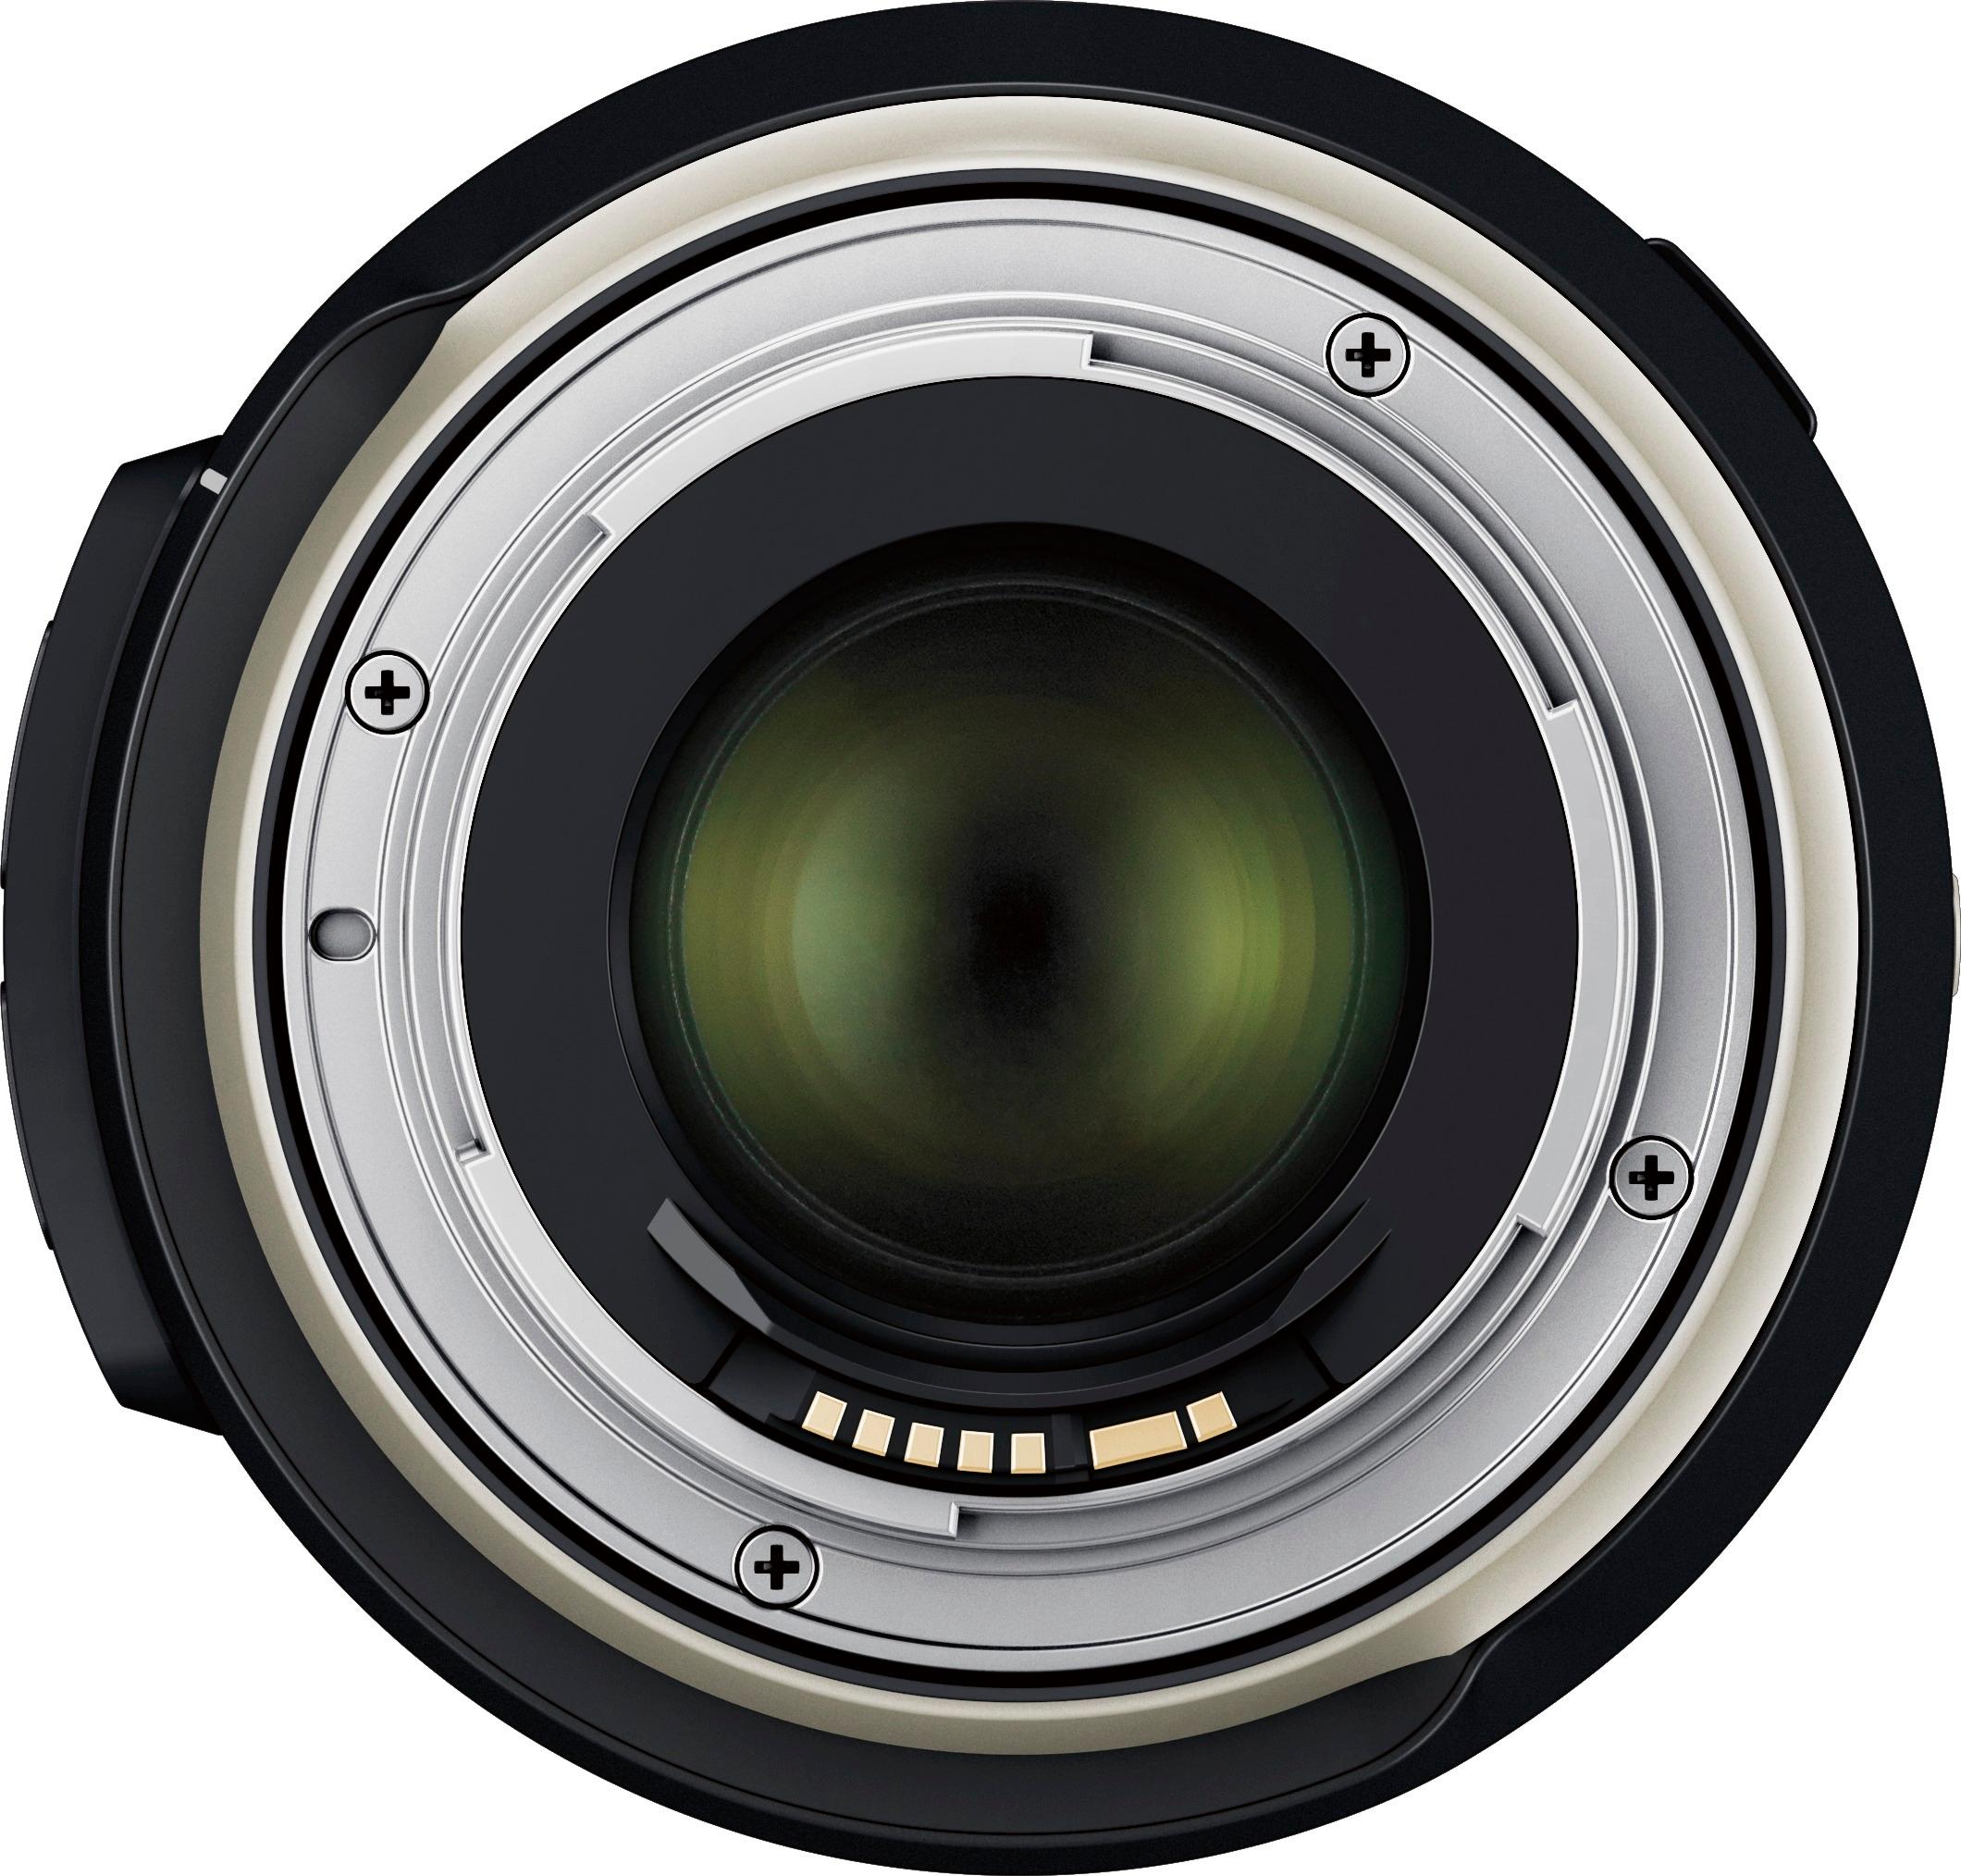 Tamron SP 24-70mm F/2.8 Di VC USD G2 Zoom Lens for Canon DSLR cameras black  AFA032C700 - Best Buy